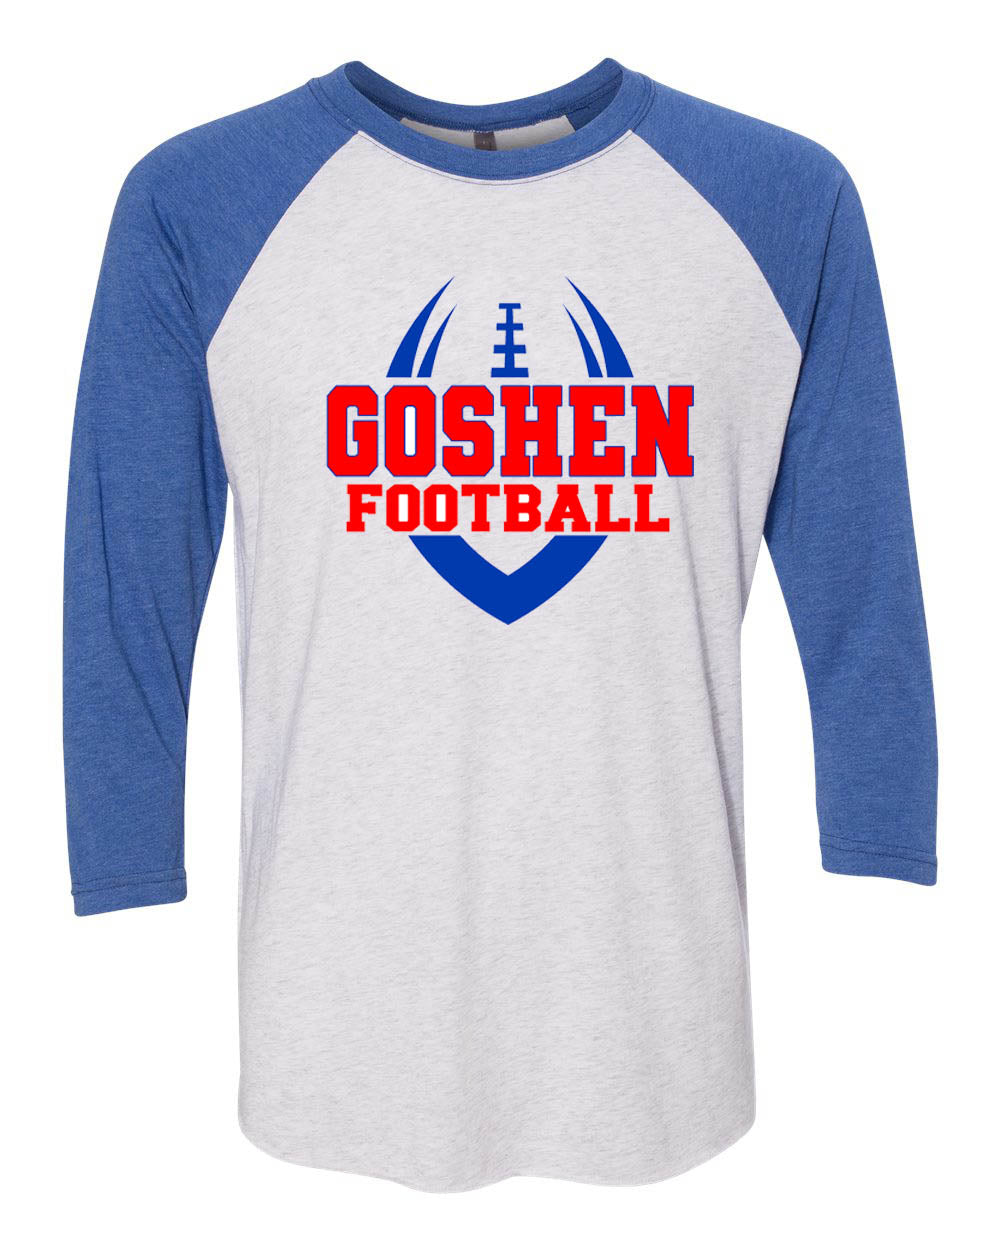 Goshen Football Design 1 raglan shirt